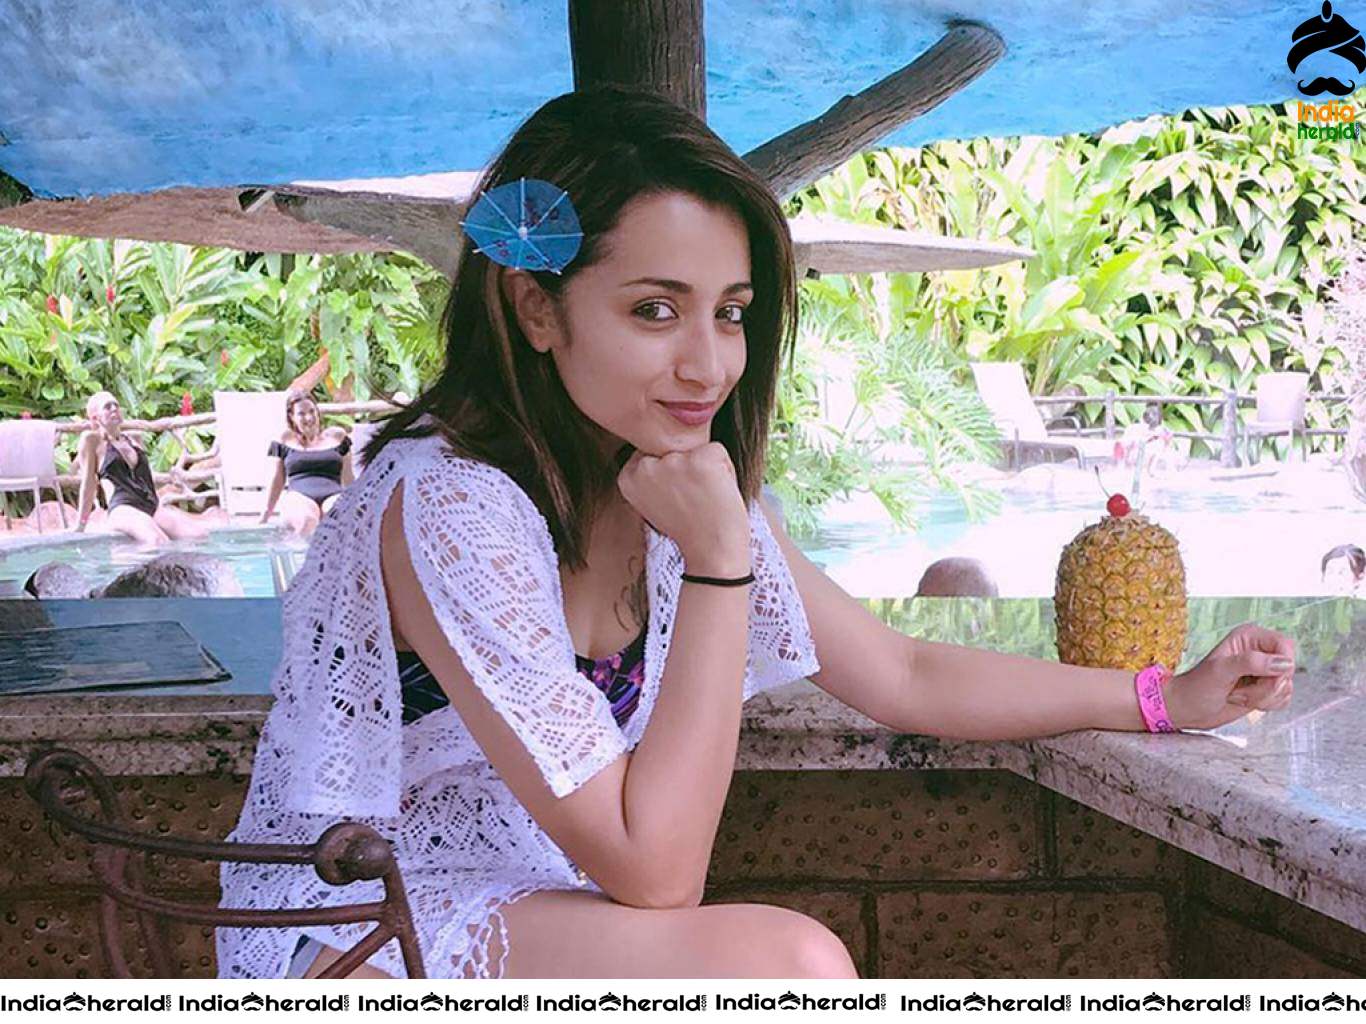 Tempting Hot HD Wallpapers of Actress Trisha Krishnan Part 2